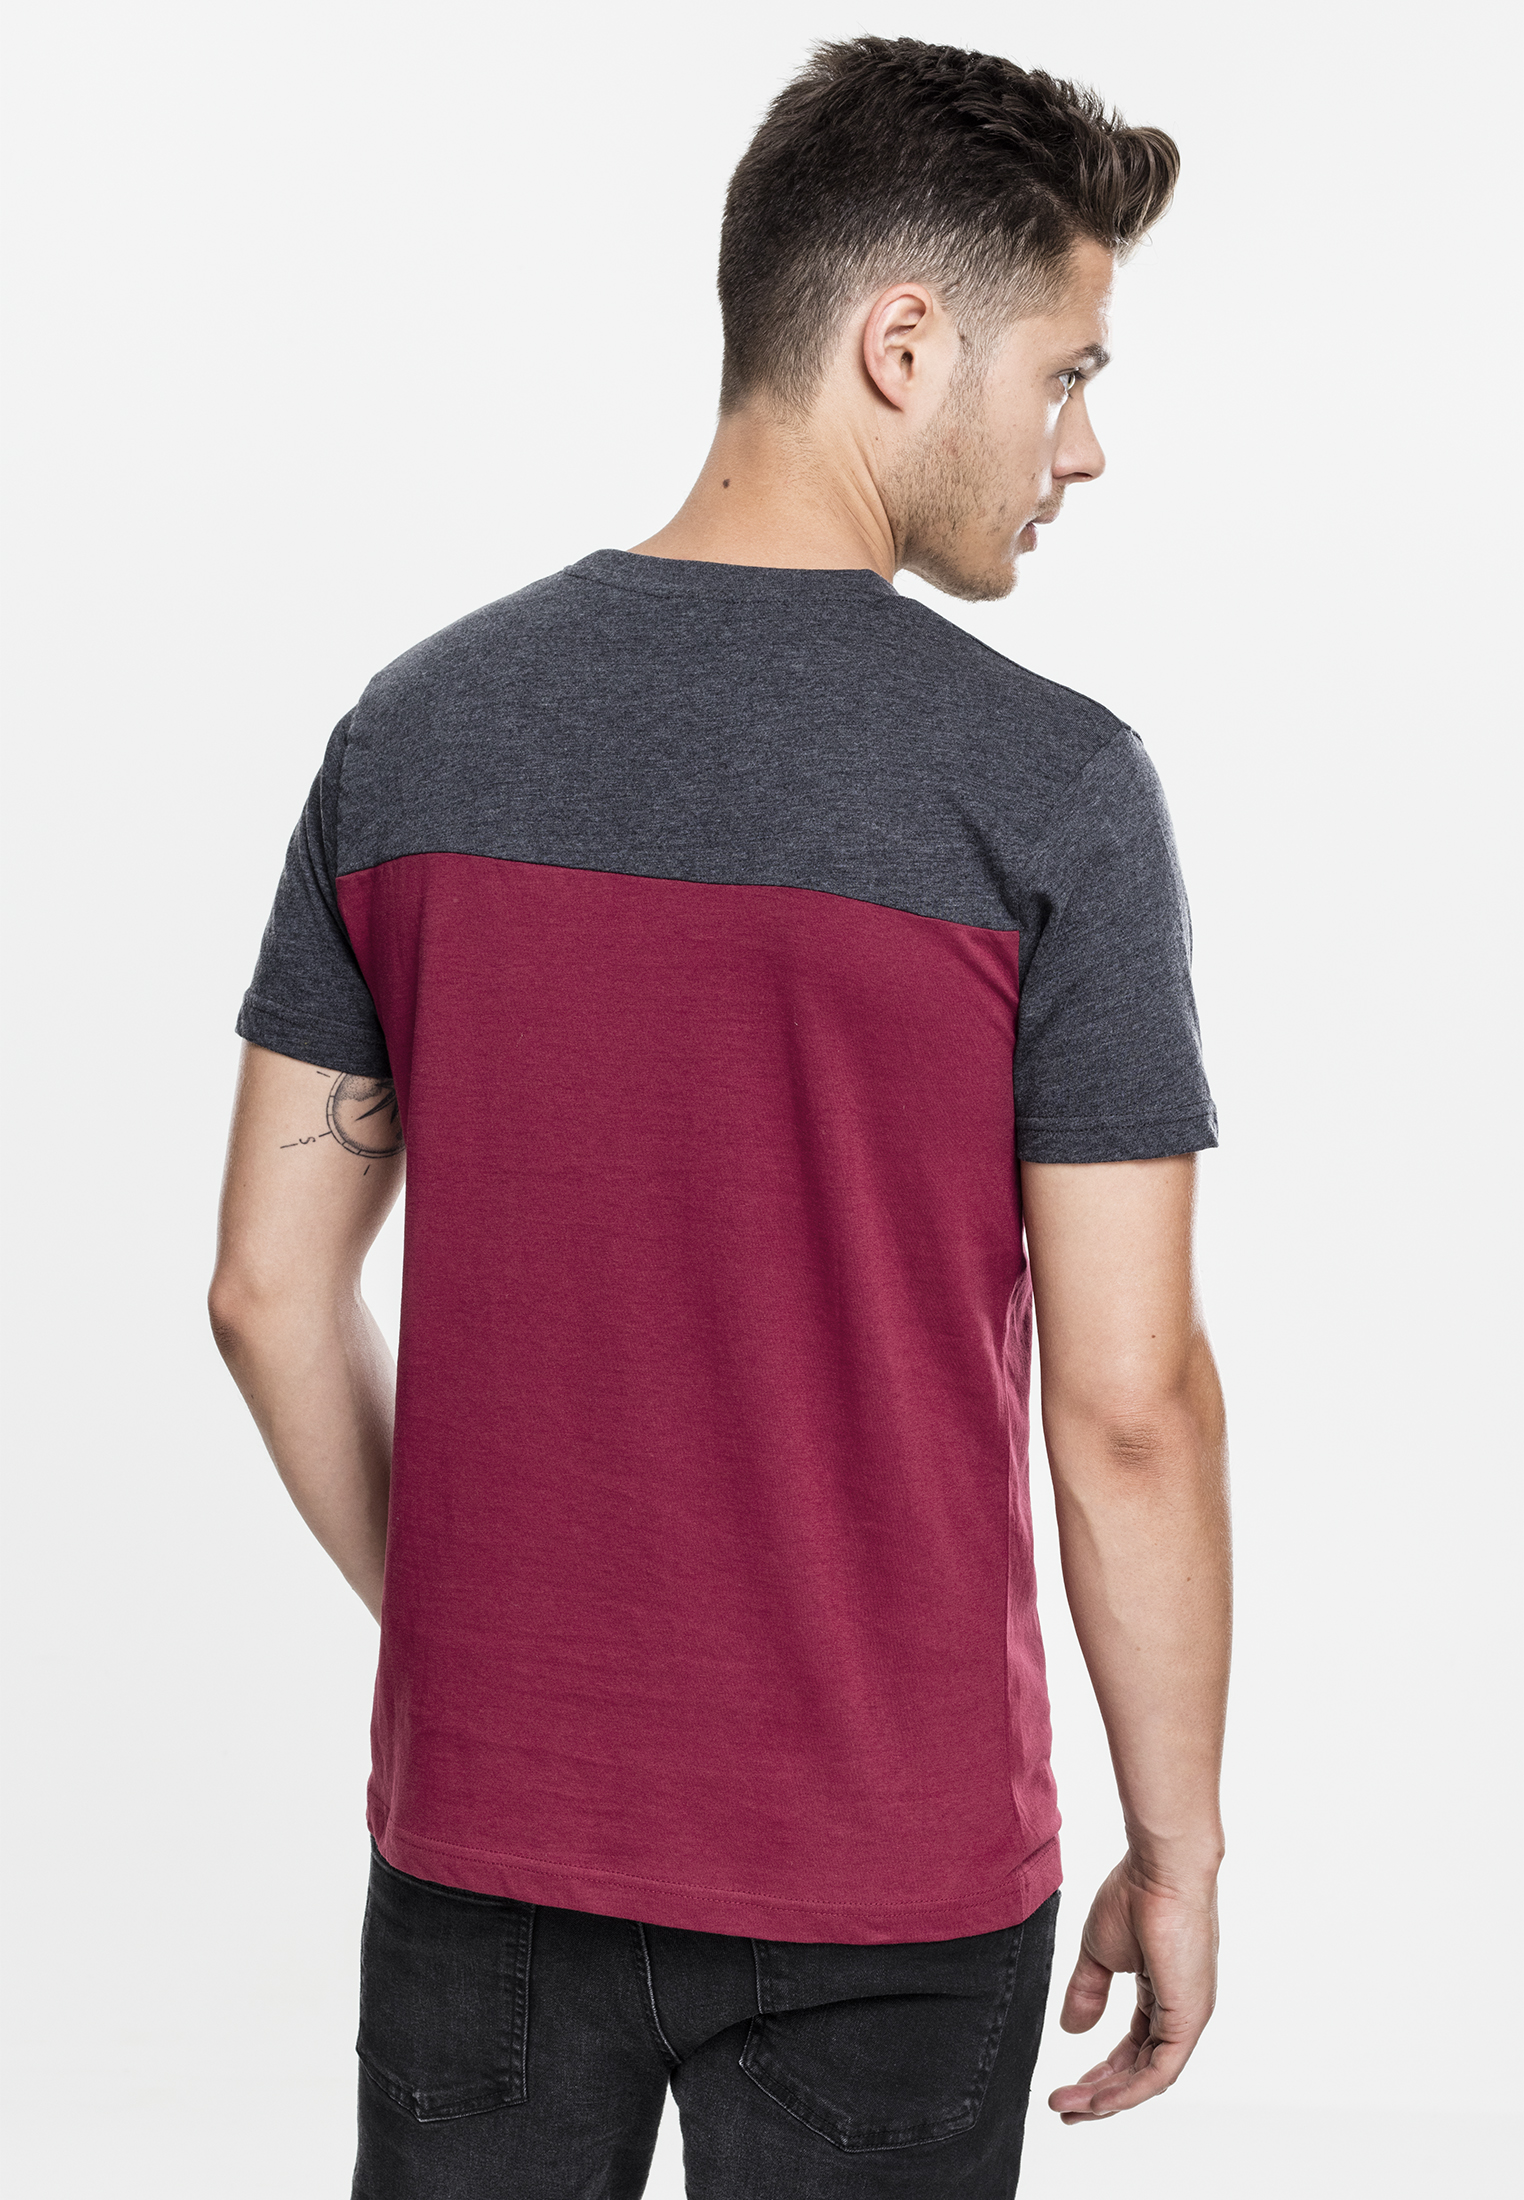 T-Shirts 3-Tone Pocket Tee in Farbe burgundy/cha/gry